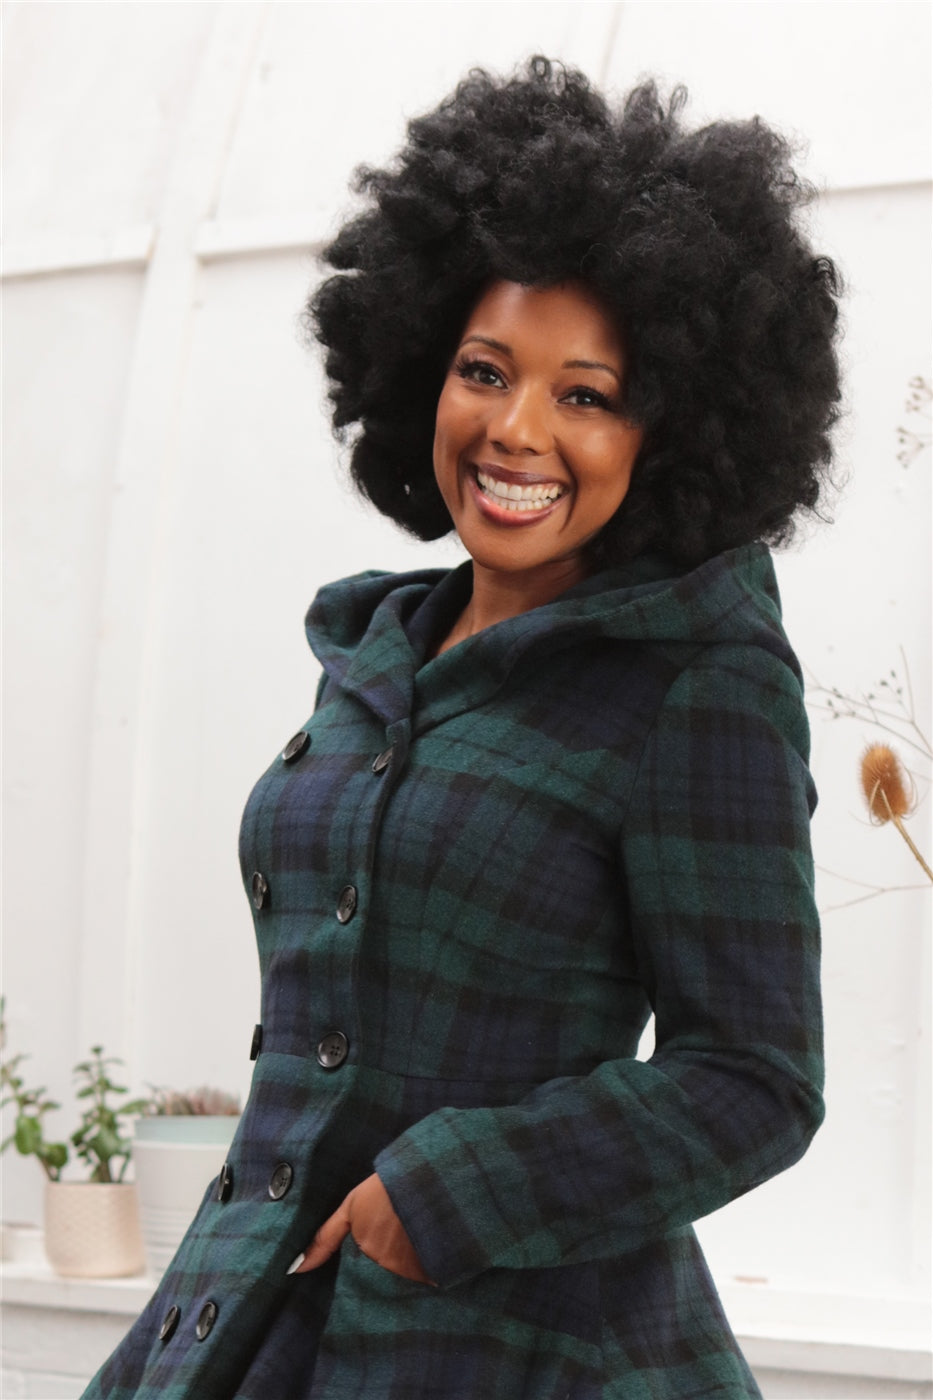 Smiling vintage pinup model wearing a vintage navy and green tartan winter coat